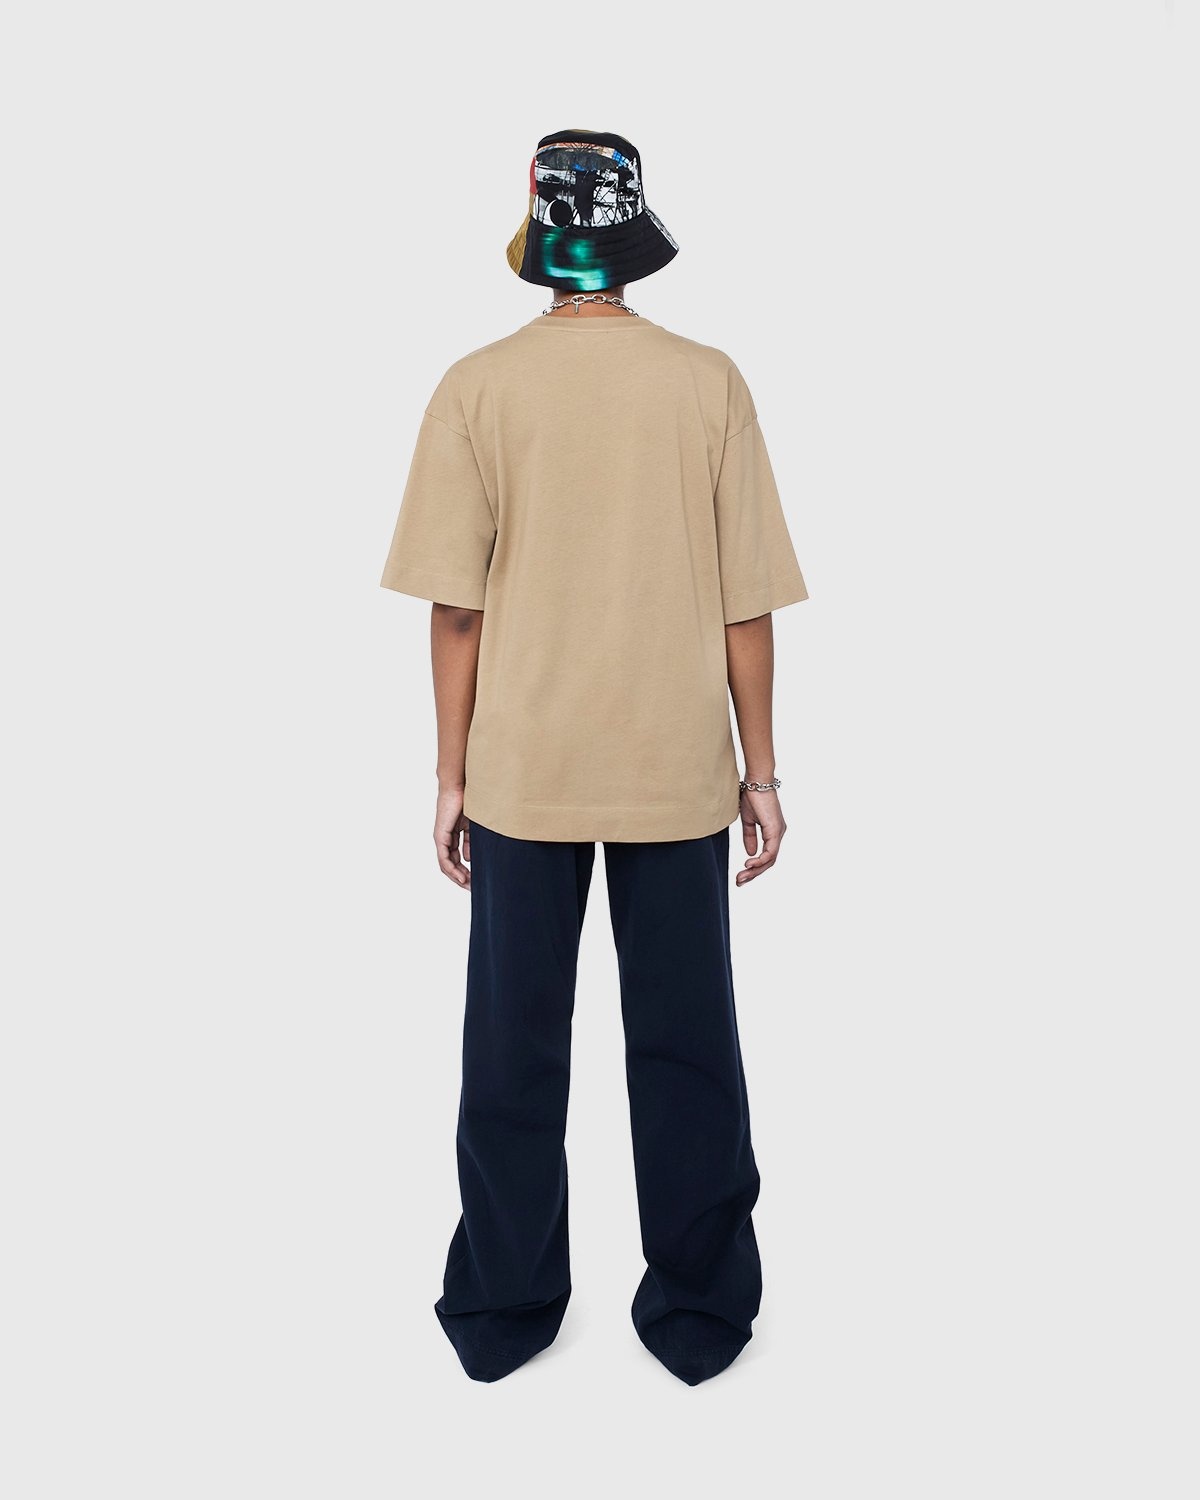 Dries van Noten – Heli Graphic T-Shirt Sand - T-shirts - Beige - Image 6